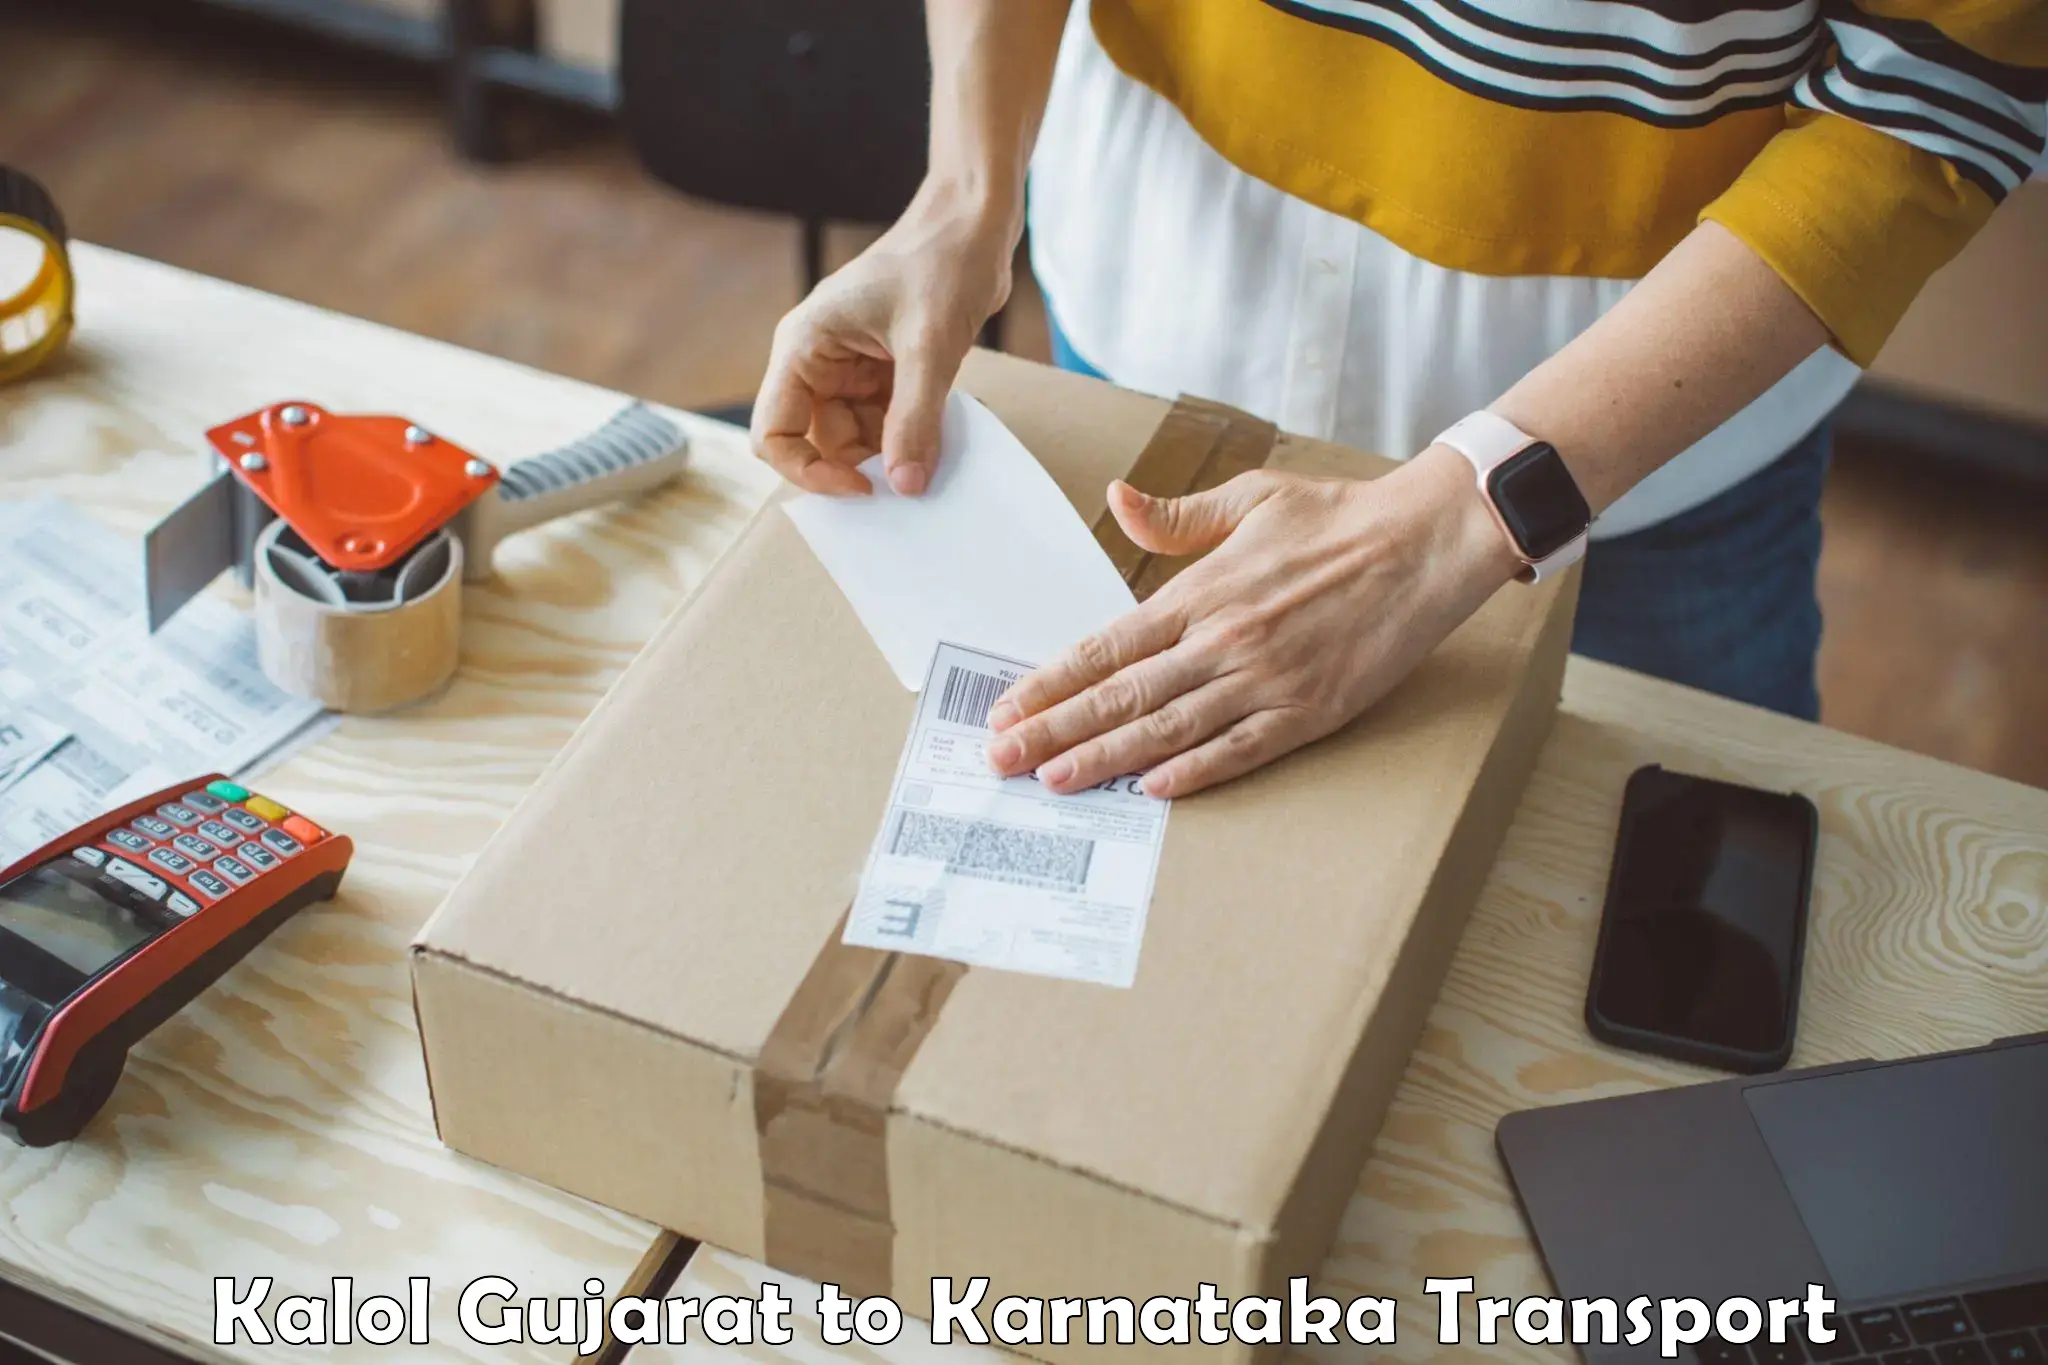 Delivery service Kalol Gujarat to Karwar